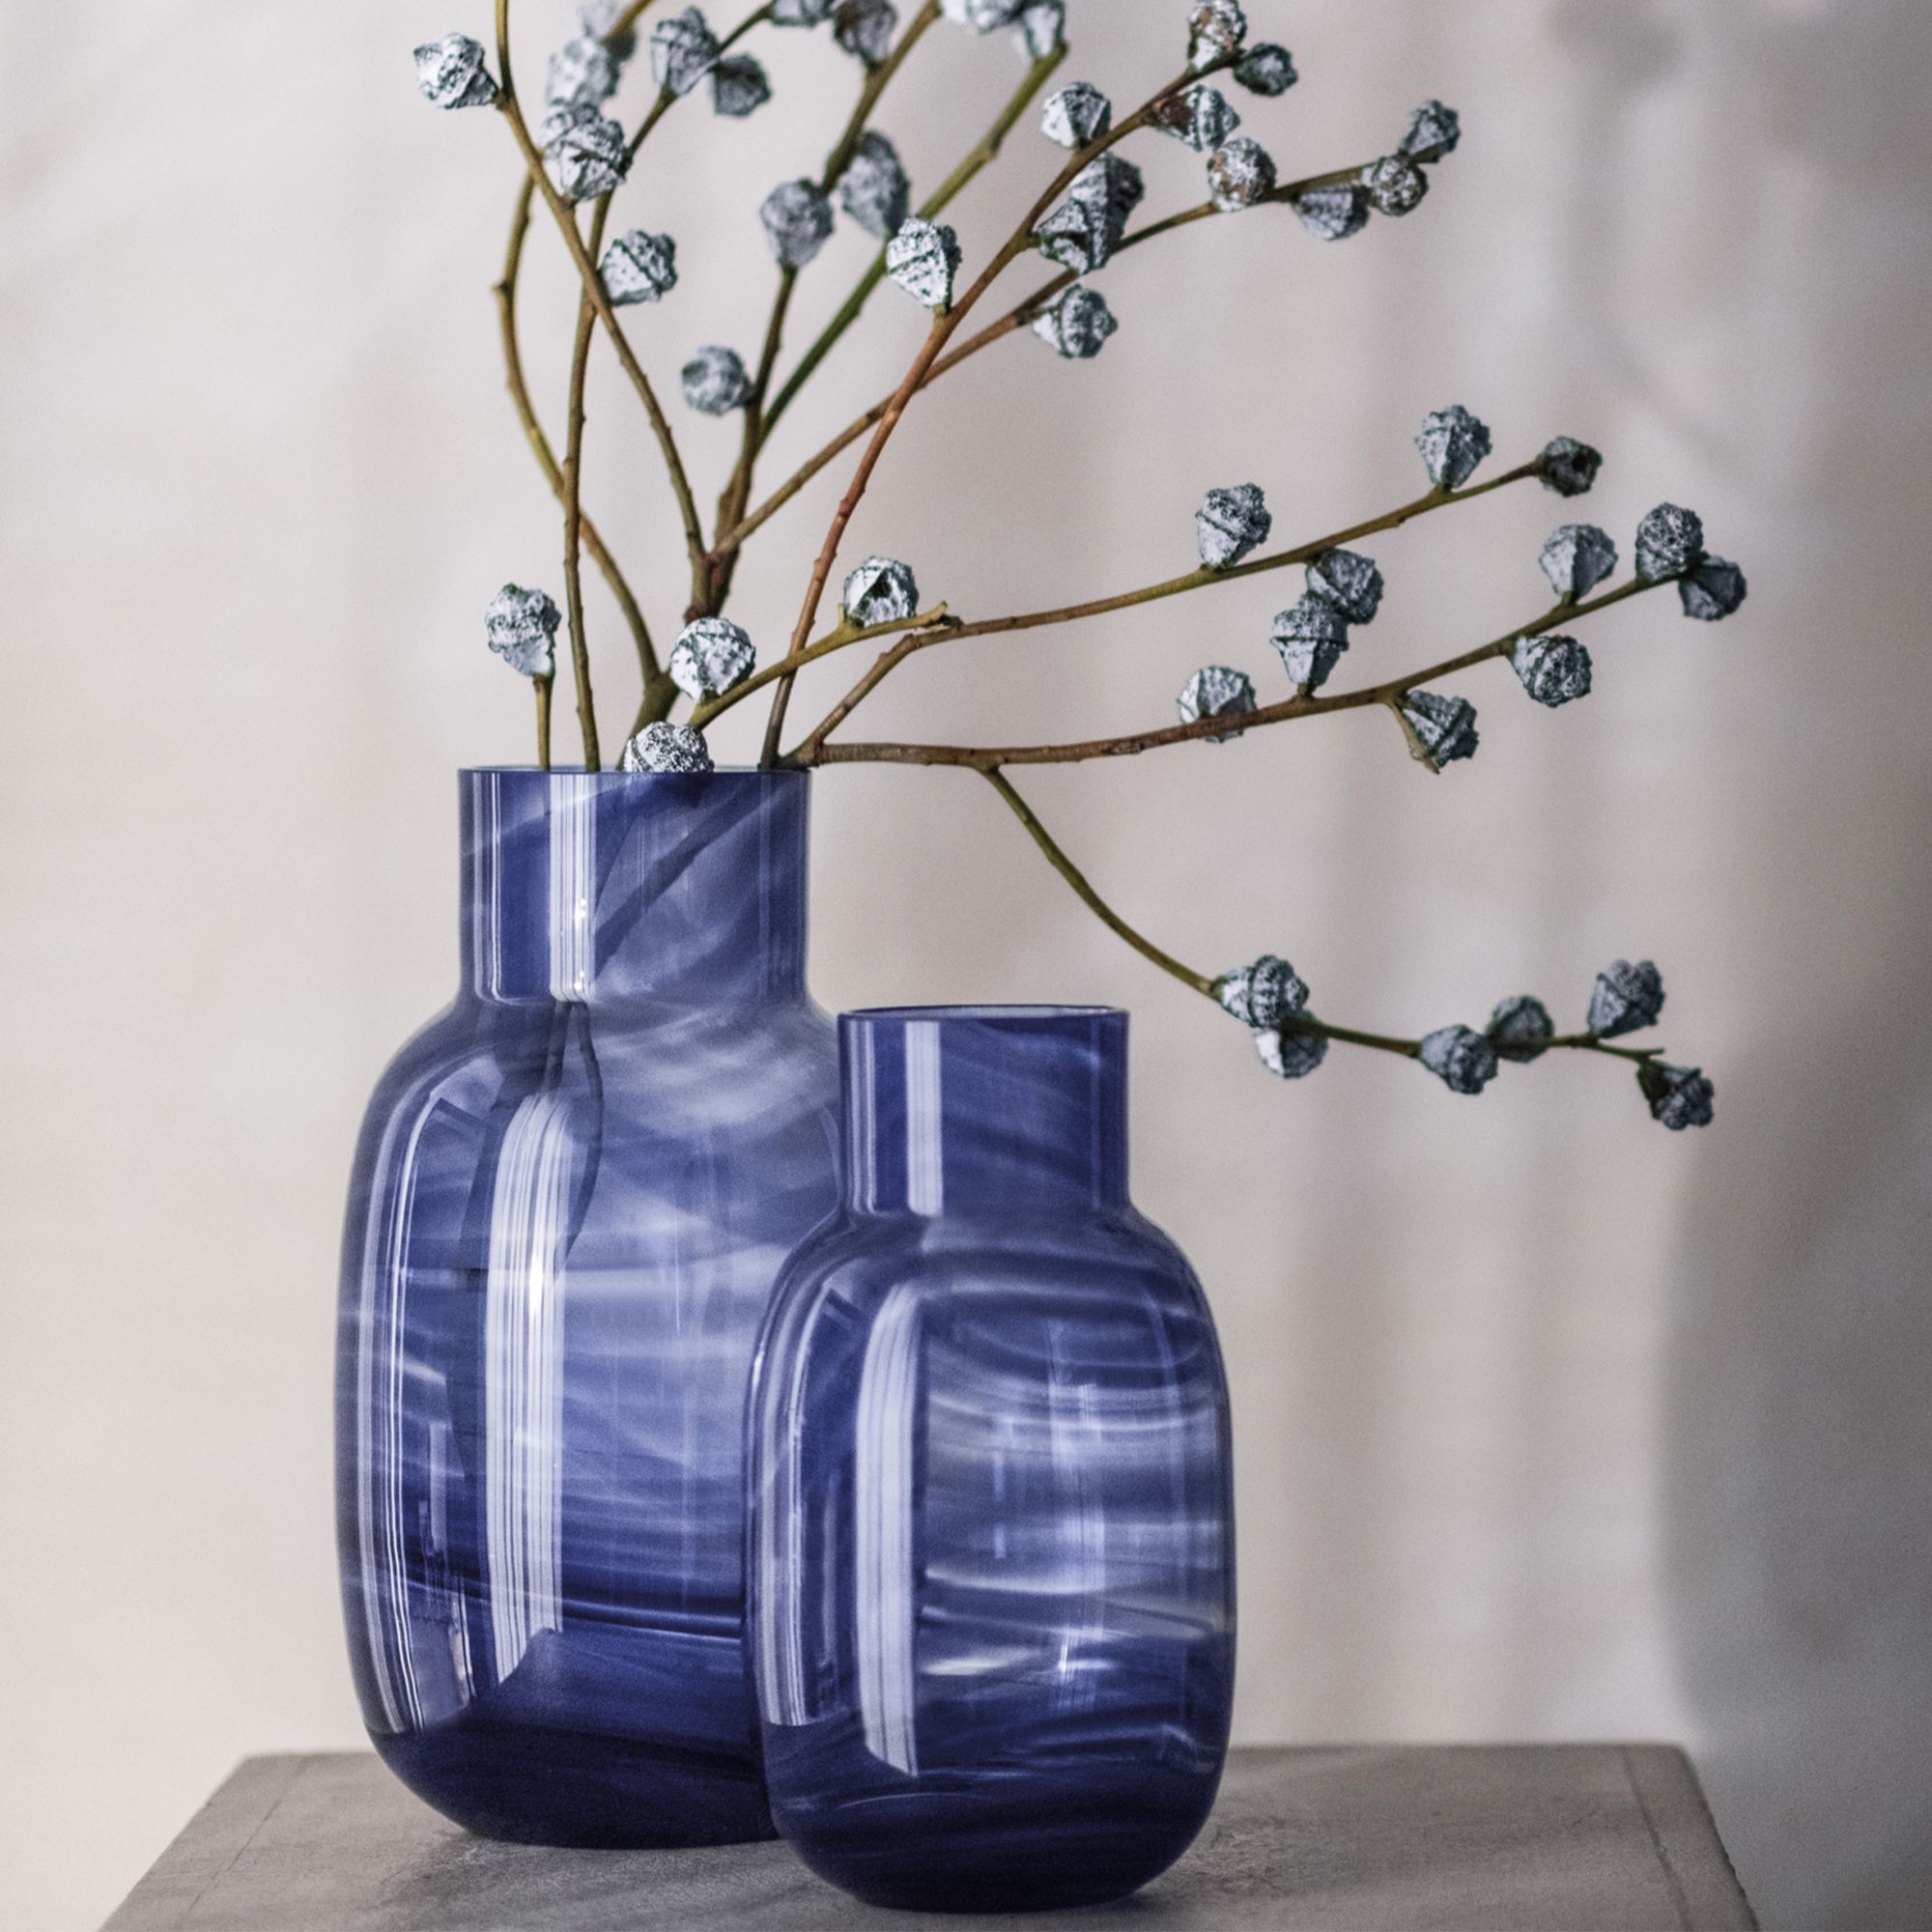 Zwiesel Glass - Vase Waters large, blue